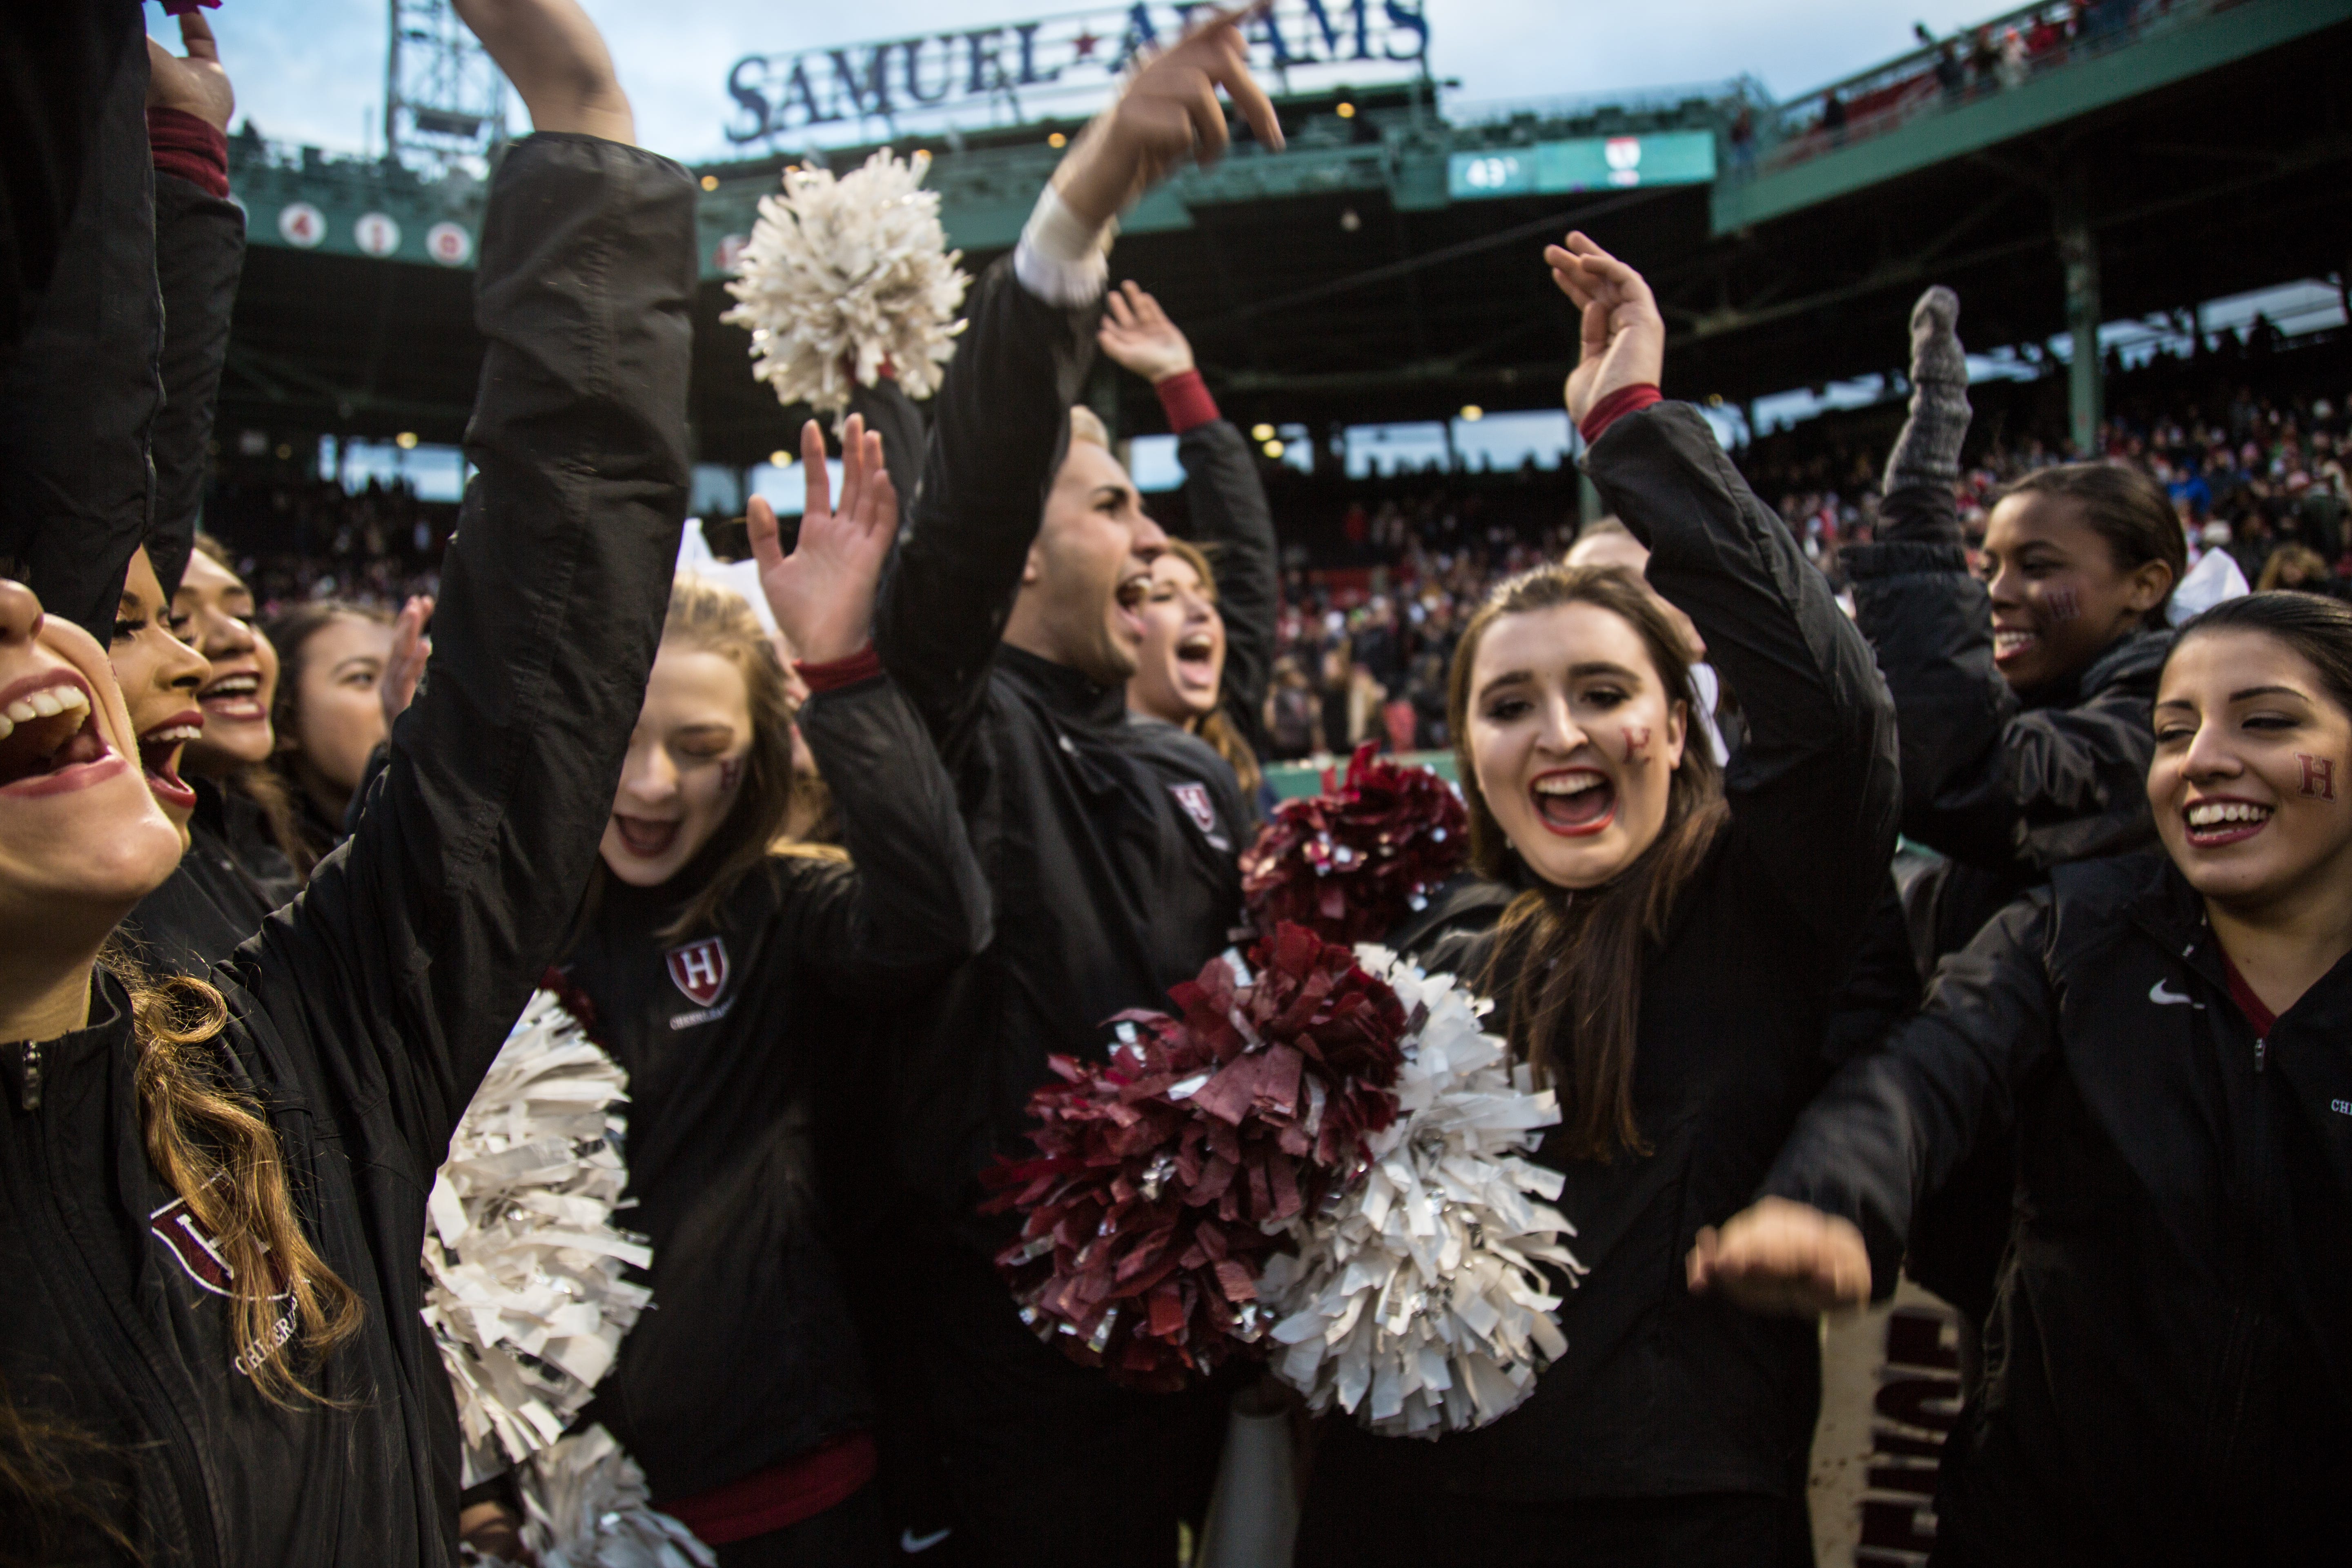 Cheerleading - Harvard University